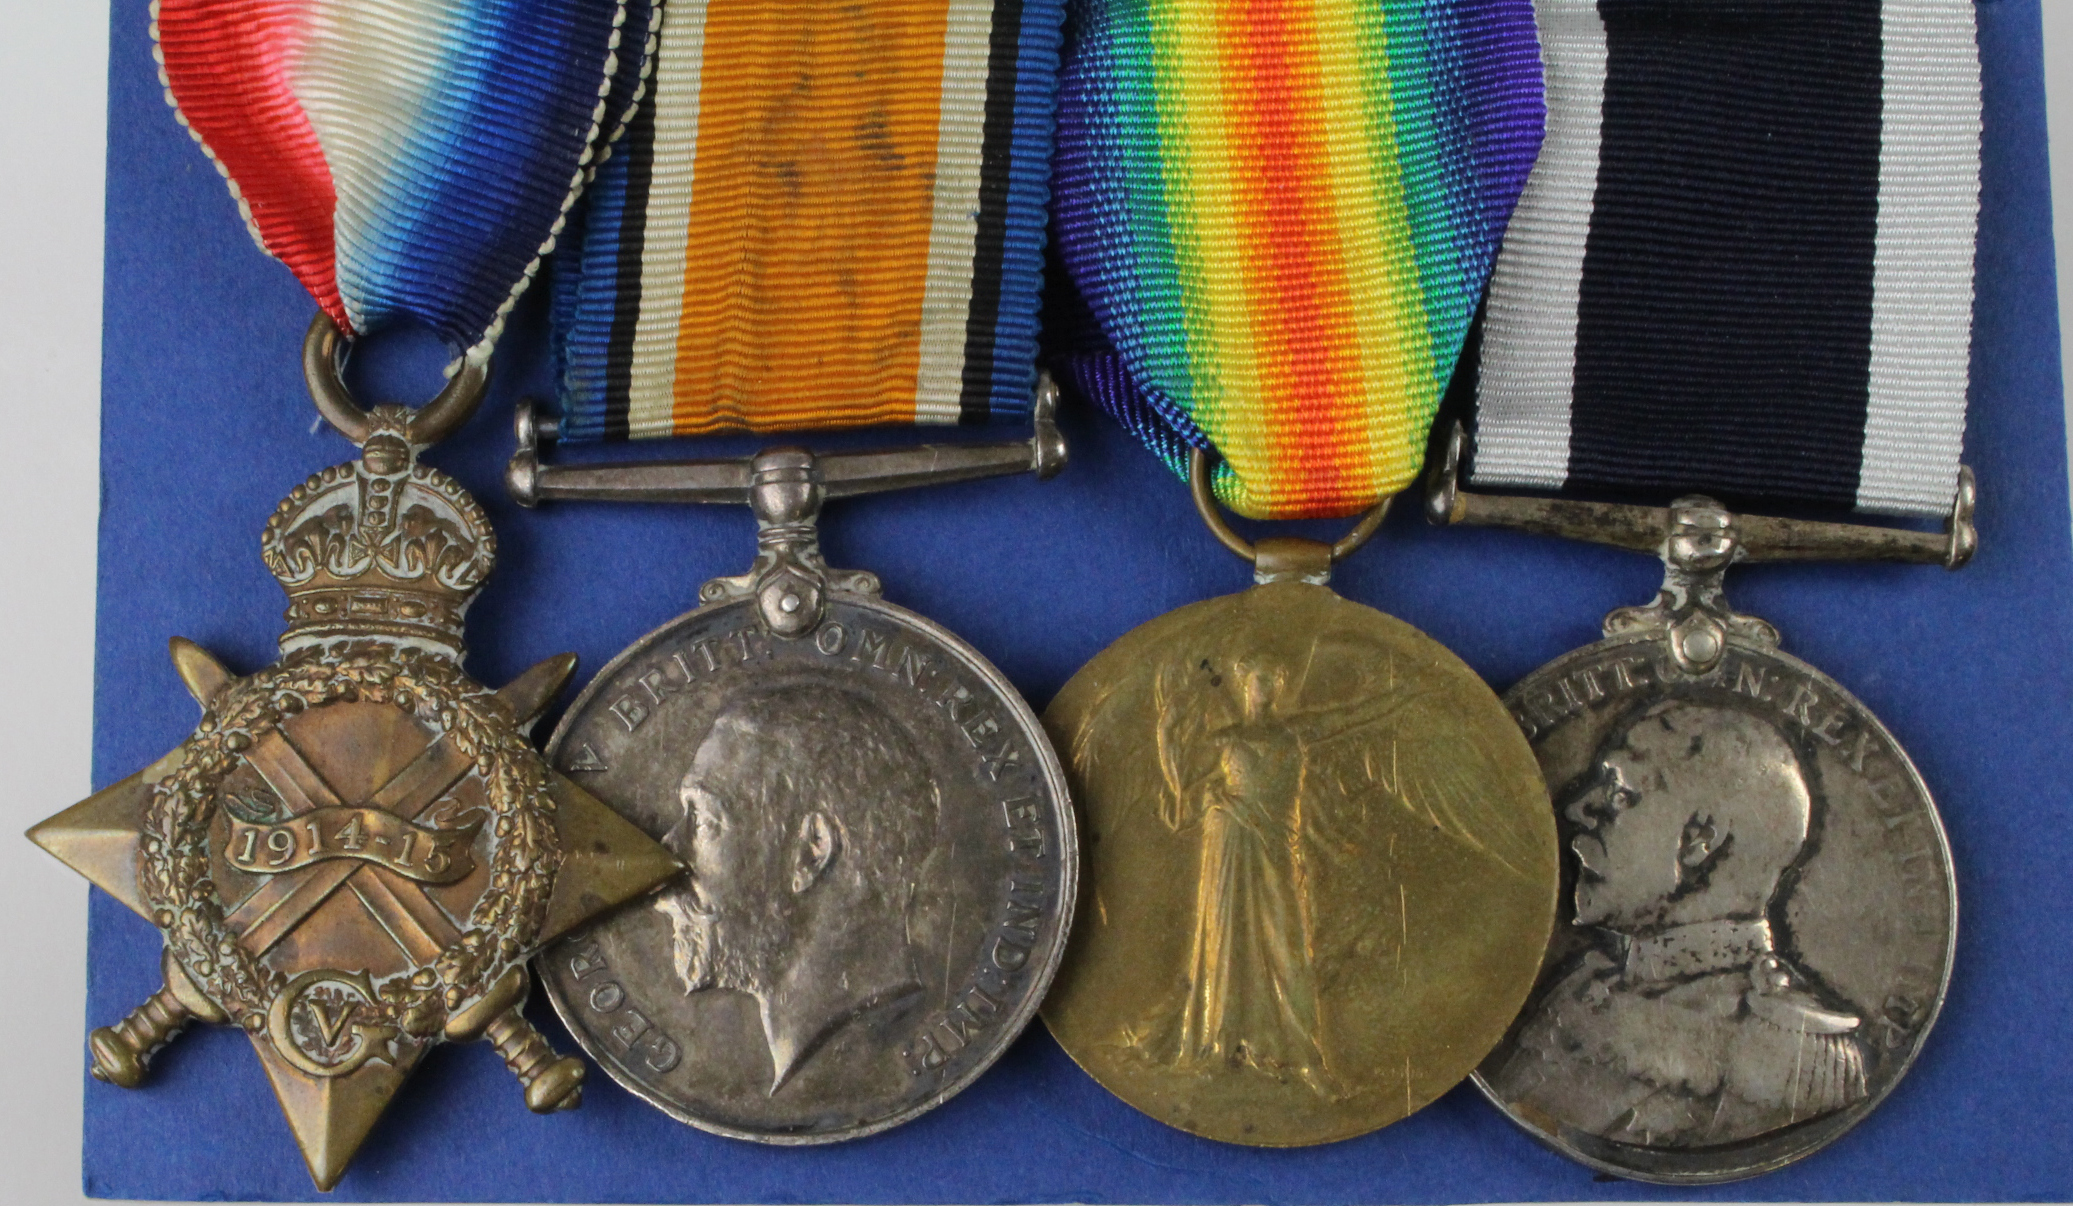 1915 Star Trio (308277 W N Hulance SPO RN), and Naval LSGC Medal GV (308277 W N Hulance STO PO HMS